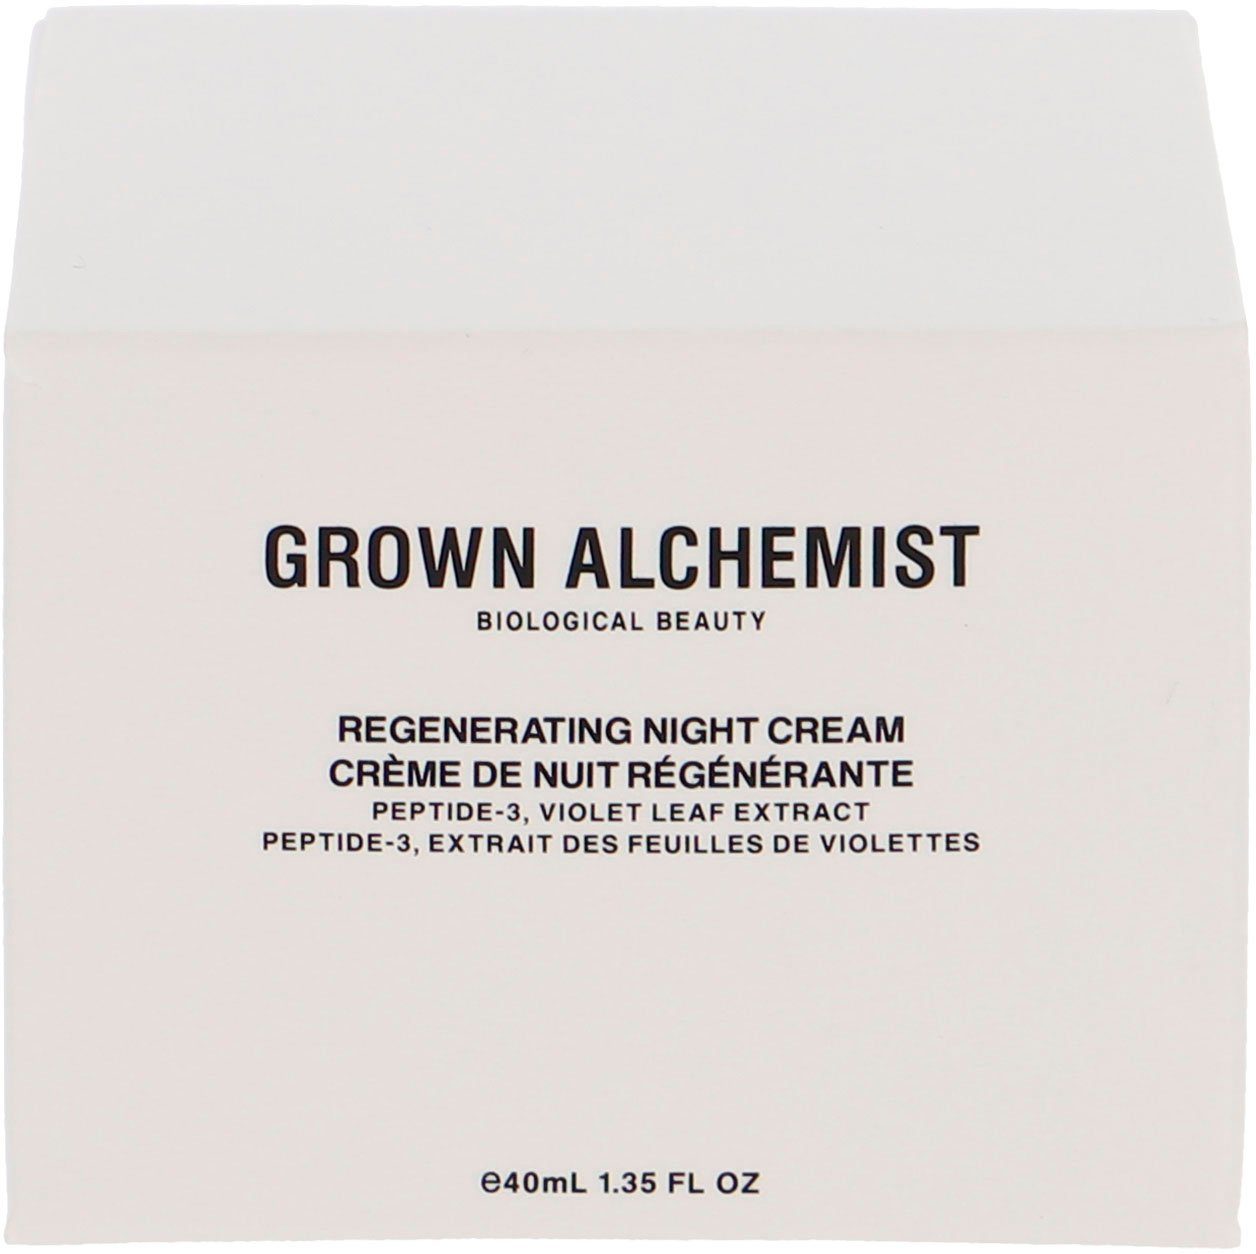 ALCHEMIST Cream, GROWN Extract Night Regenerating Neuro-Peptide, Leaf Violet Nachtcreme